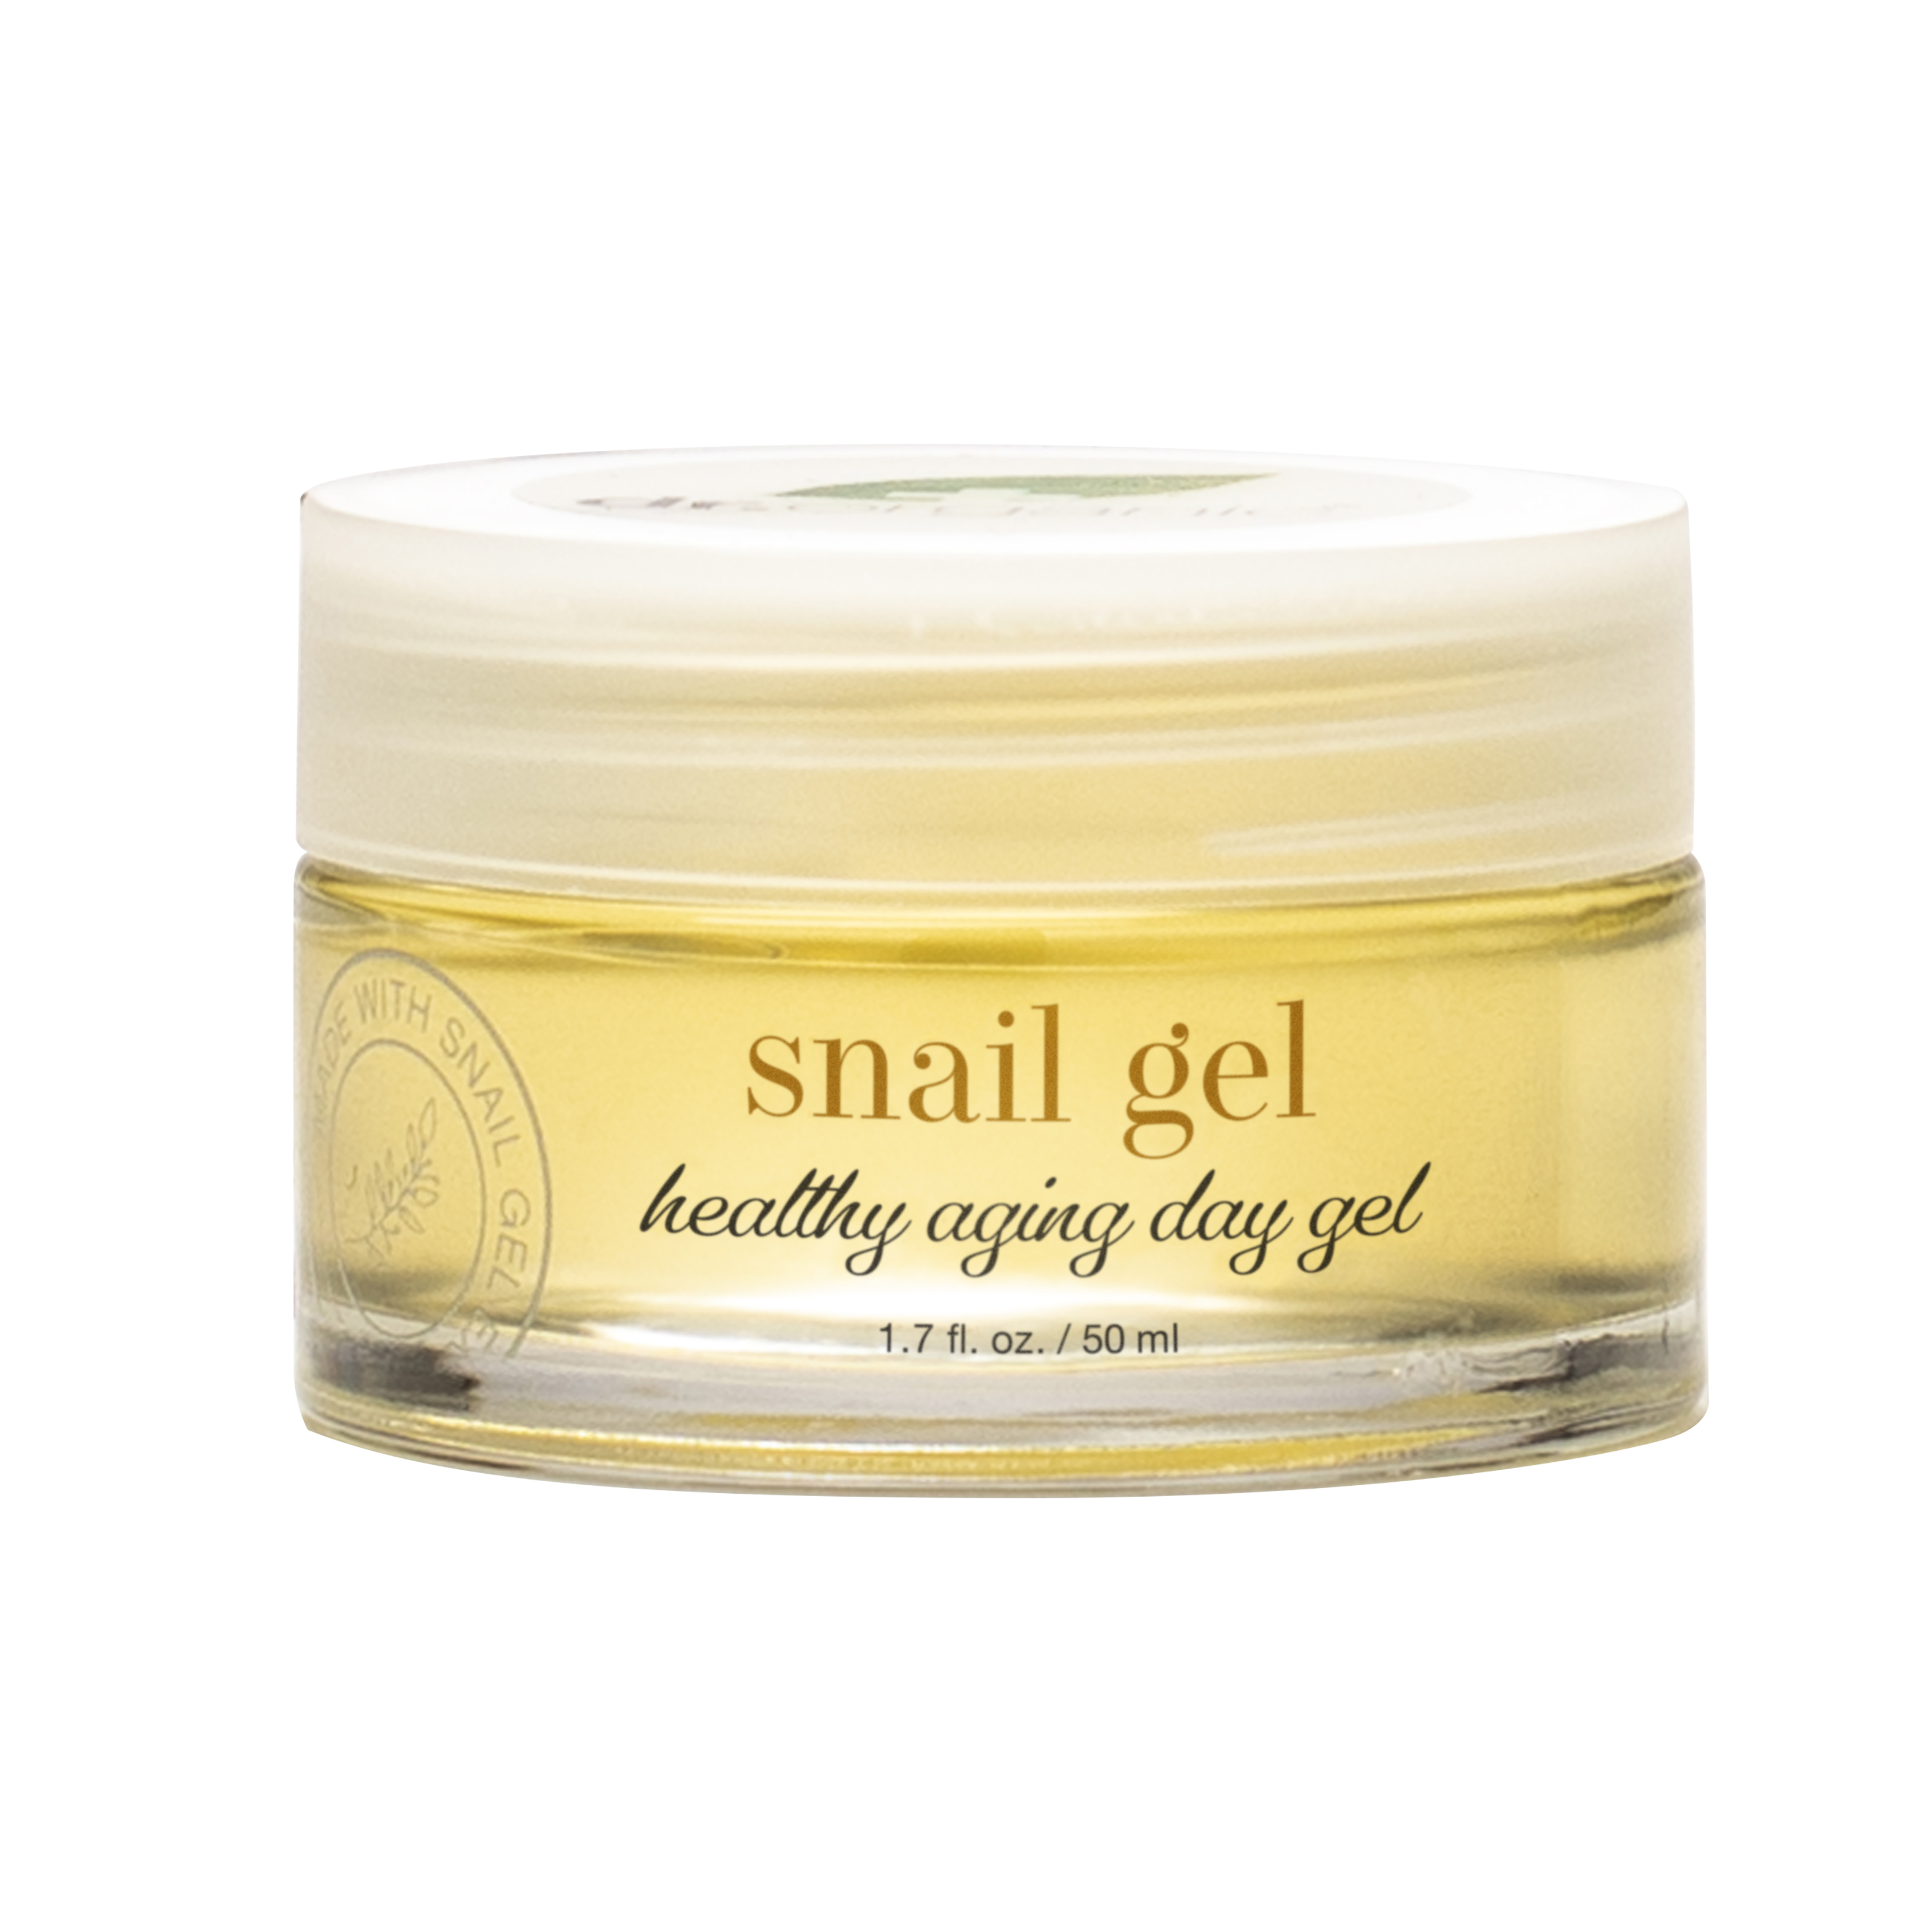 snail gel anti aging skincare